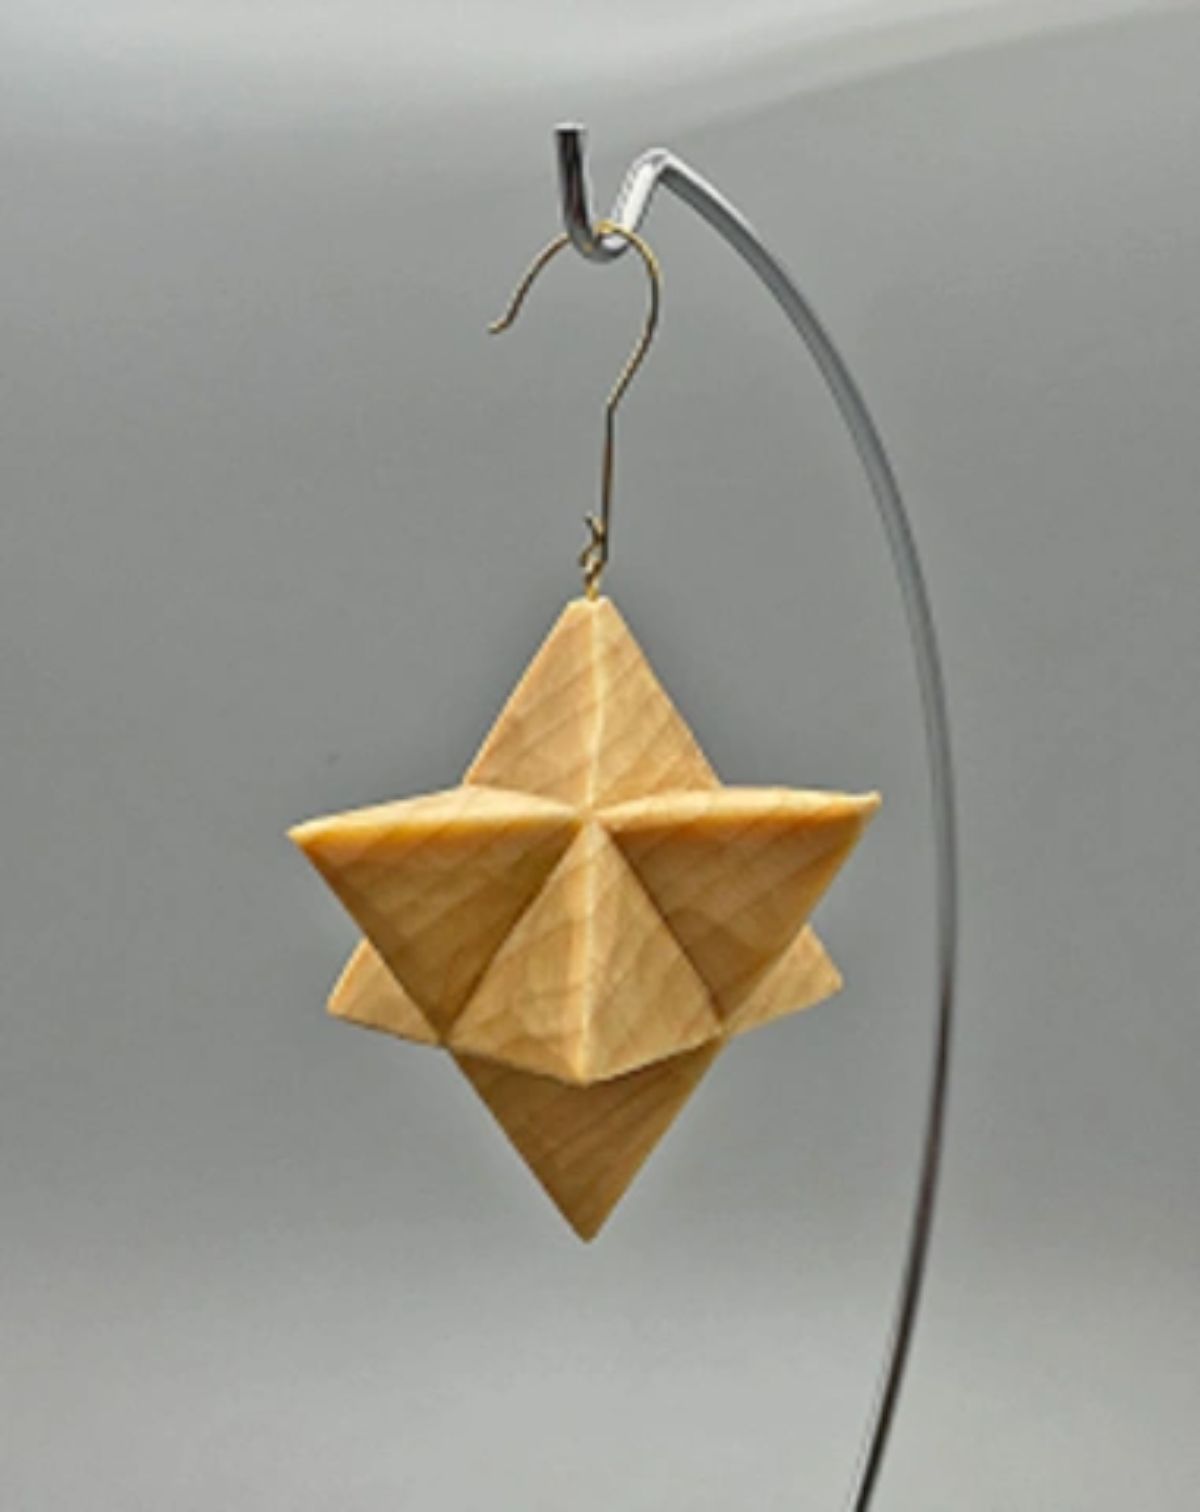 DIY Wood Carving a Moravian Star Ornament